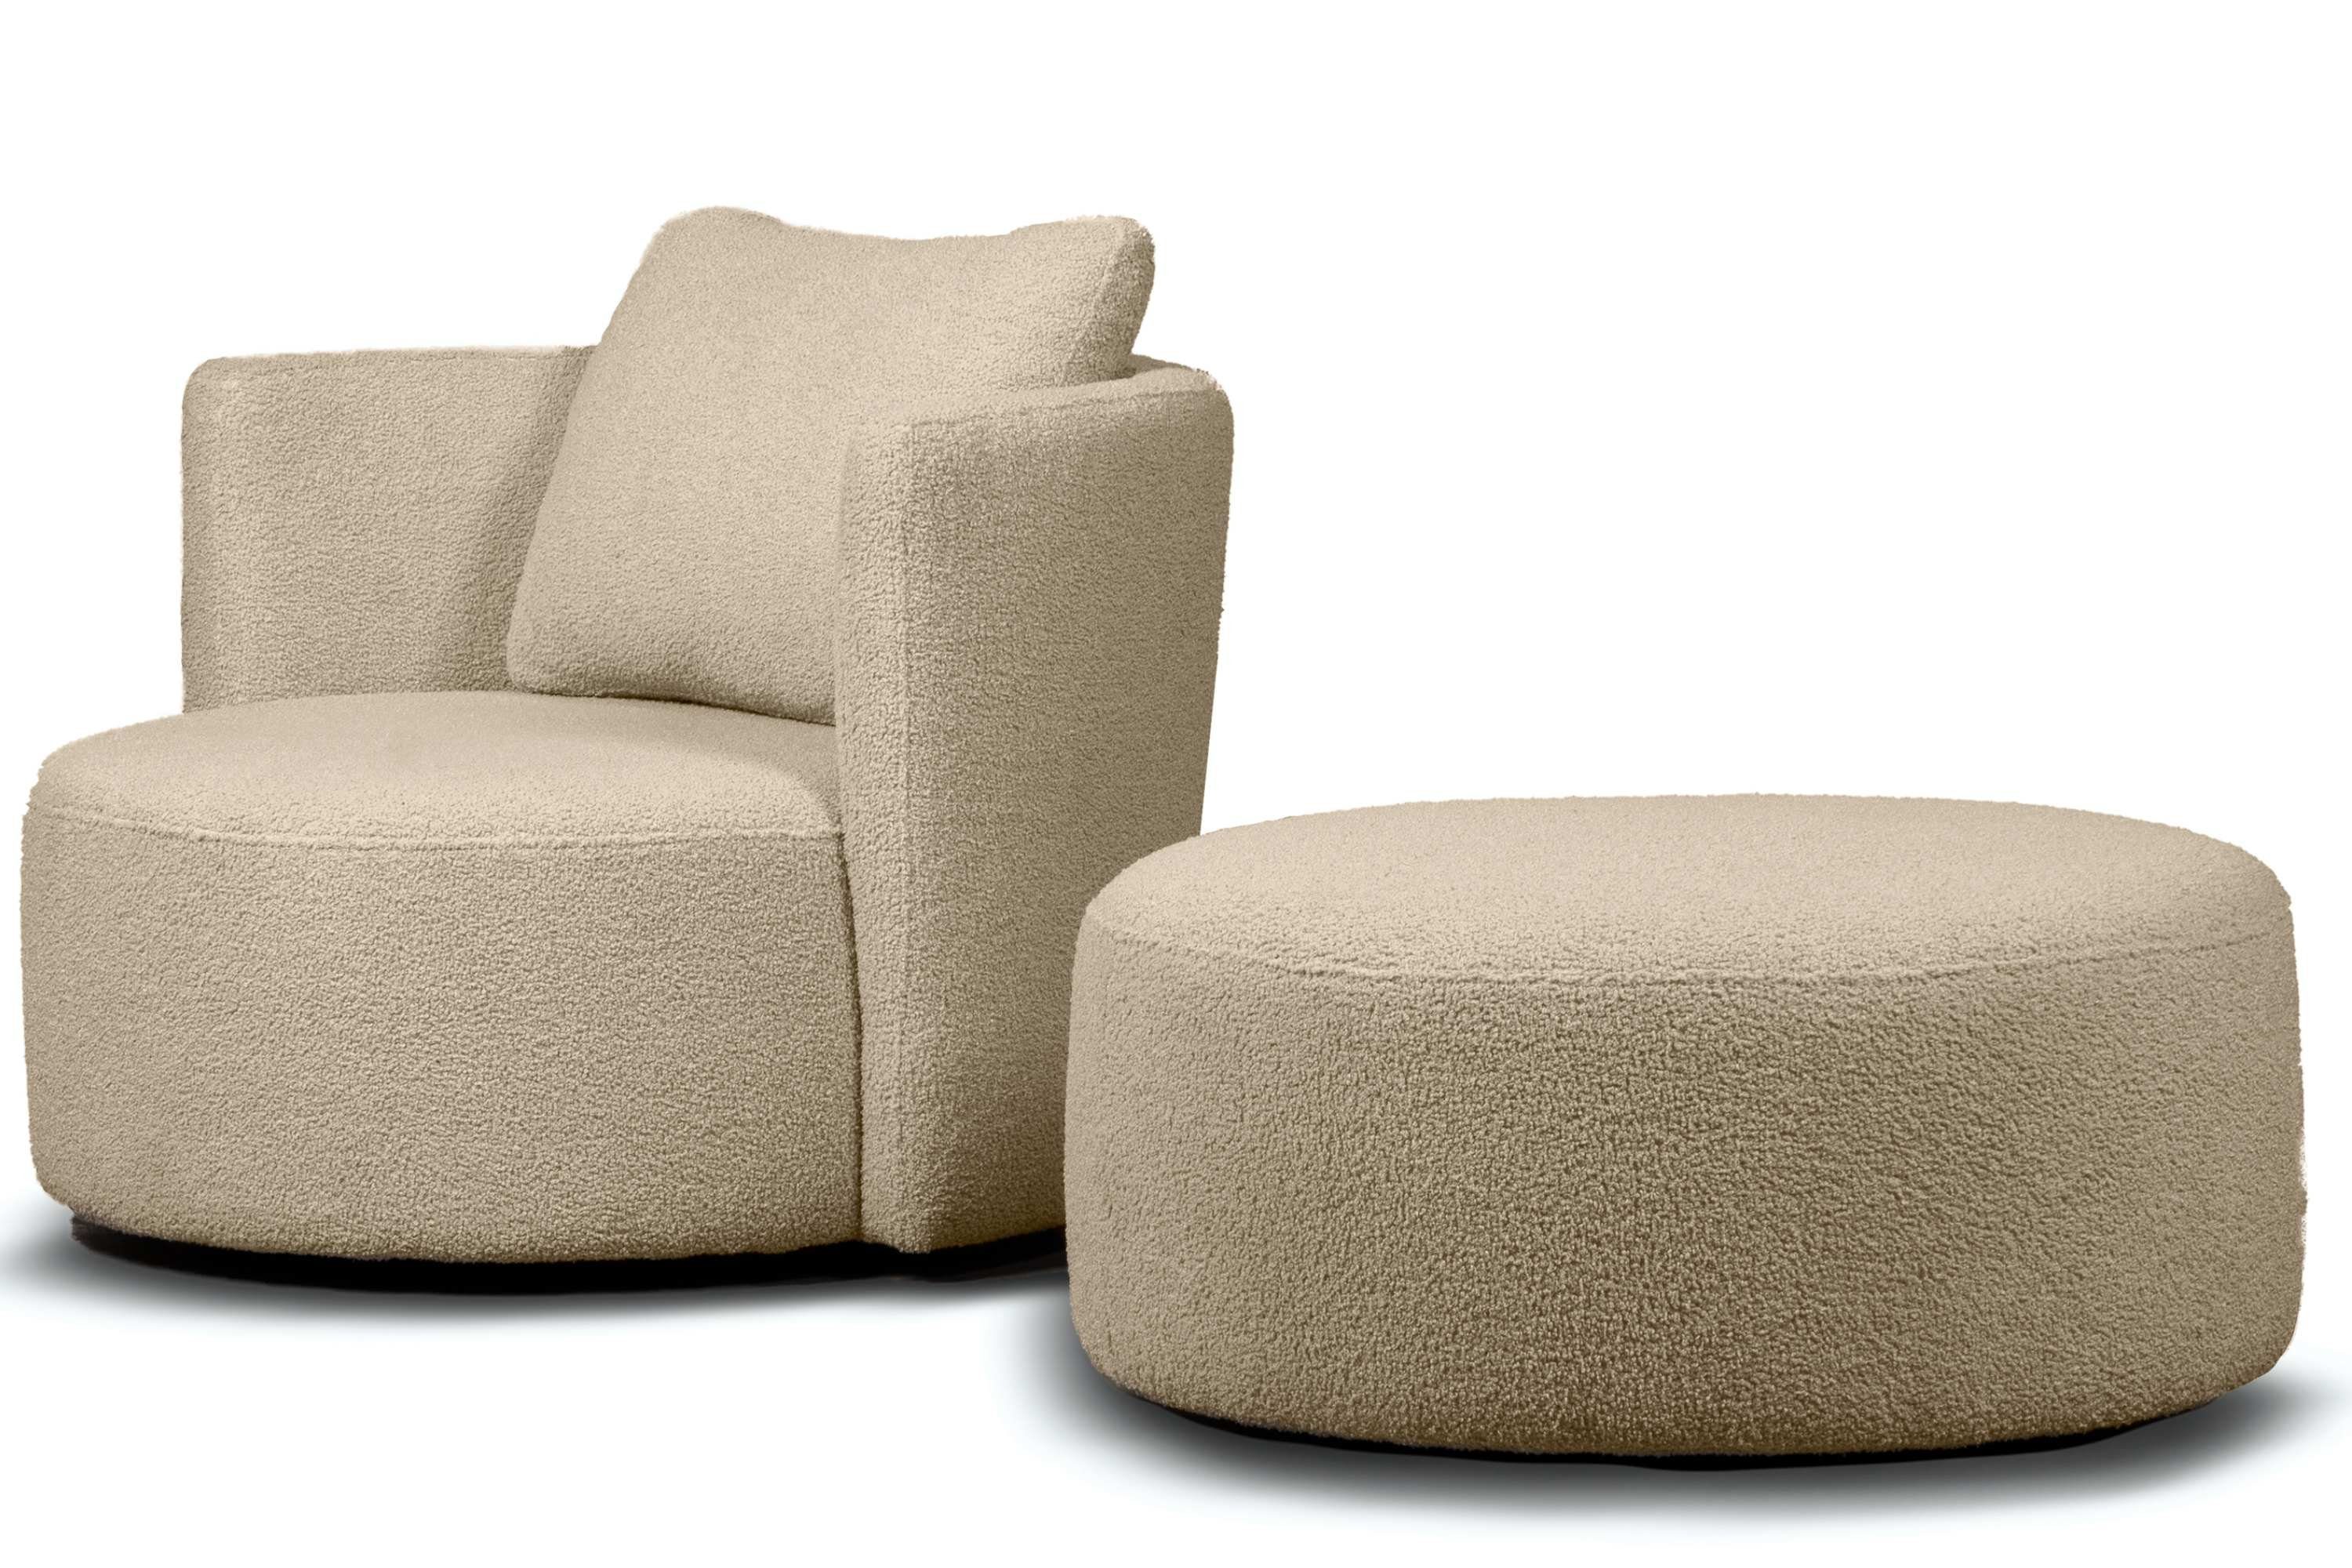 Konsimo Drehsessel RAGGI mit Sessel Sitzhocker, Drehfunktion, Bouclé-Stoff, Sitzen komfortables mit 360°